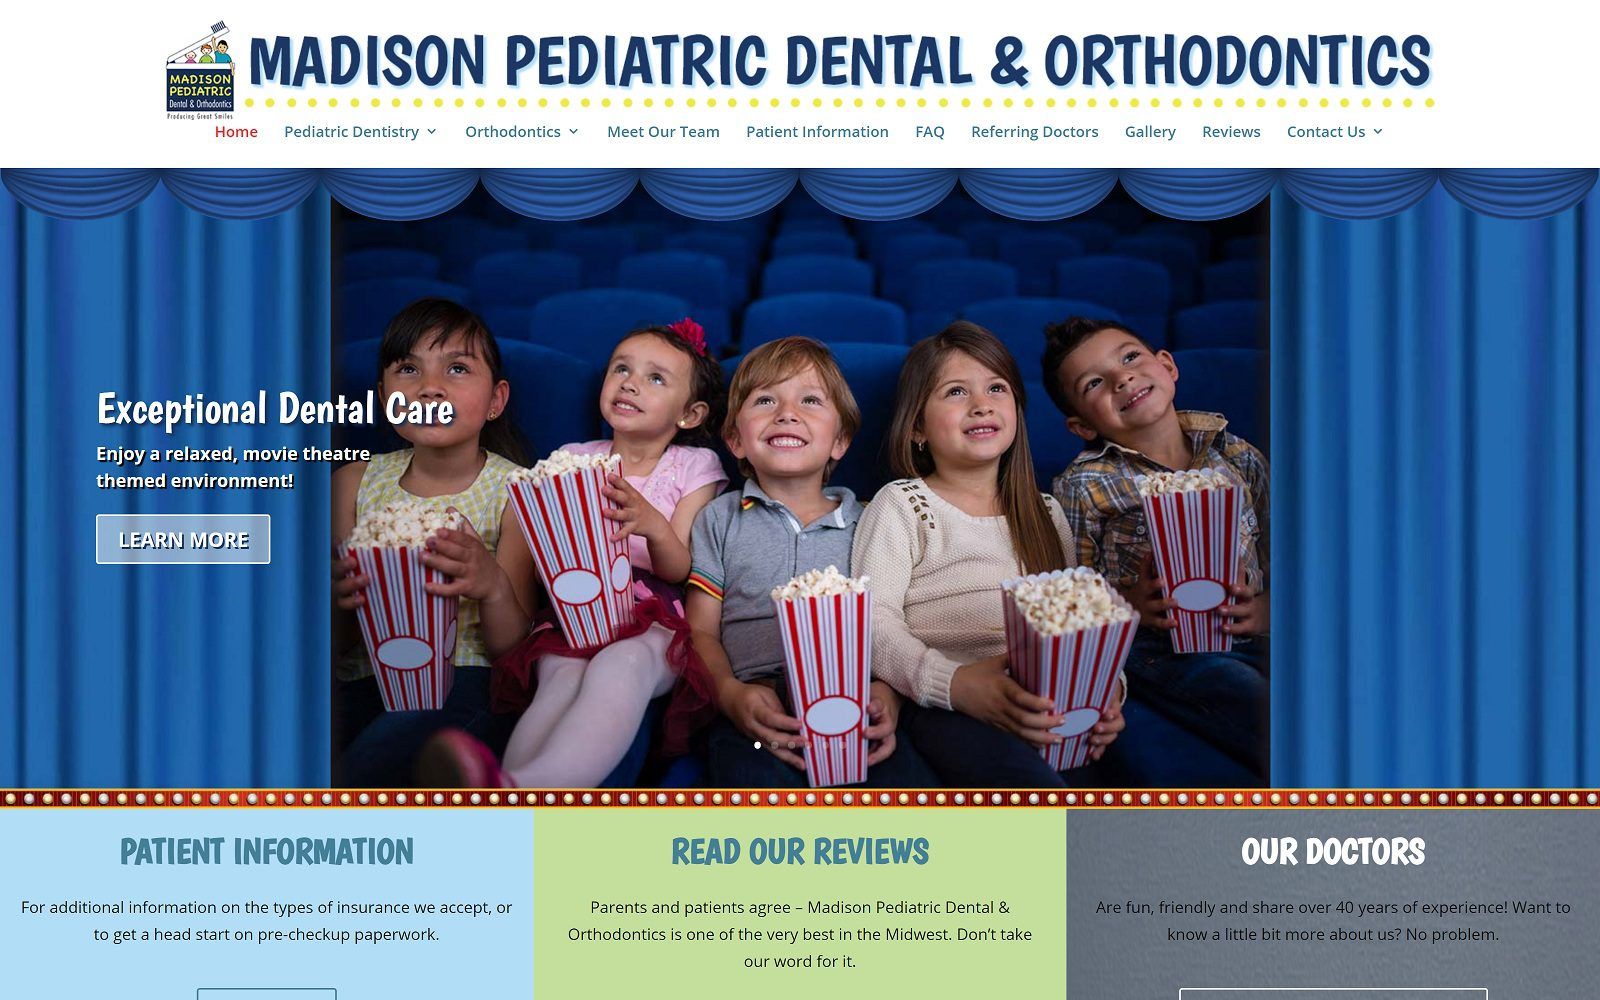 The screenshot of madison pediatric dental & orthodontics website